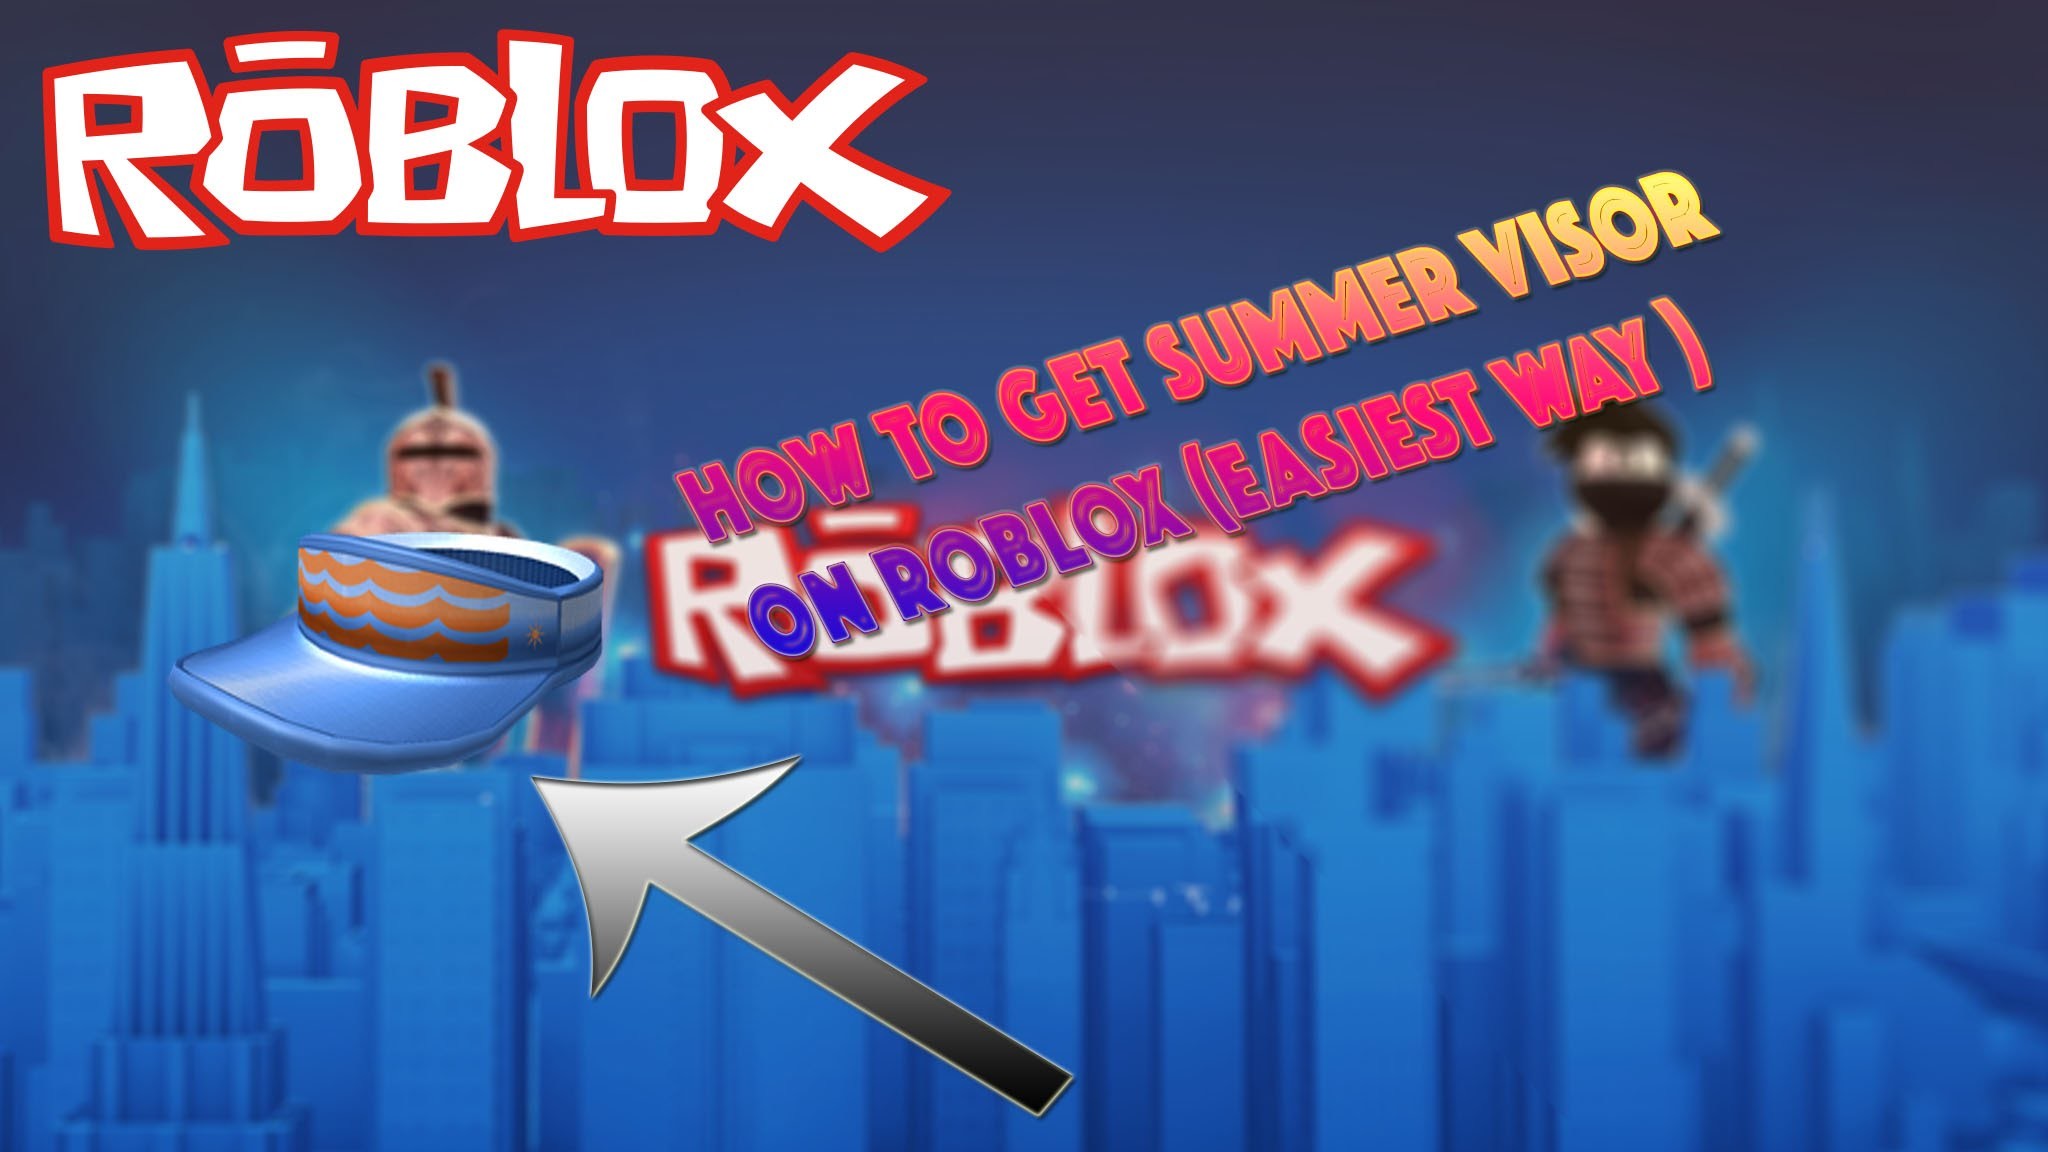 Roblox 2048 - 2048 pixels wide and 1152 pixels tall roblox